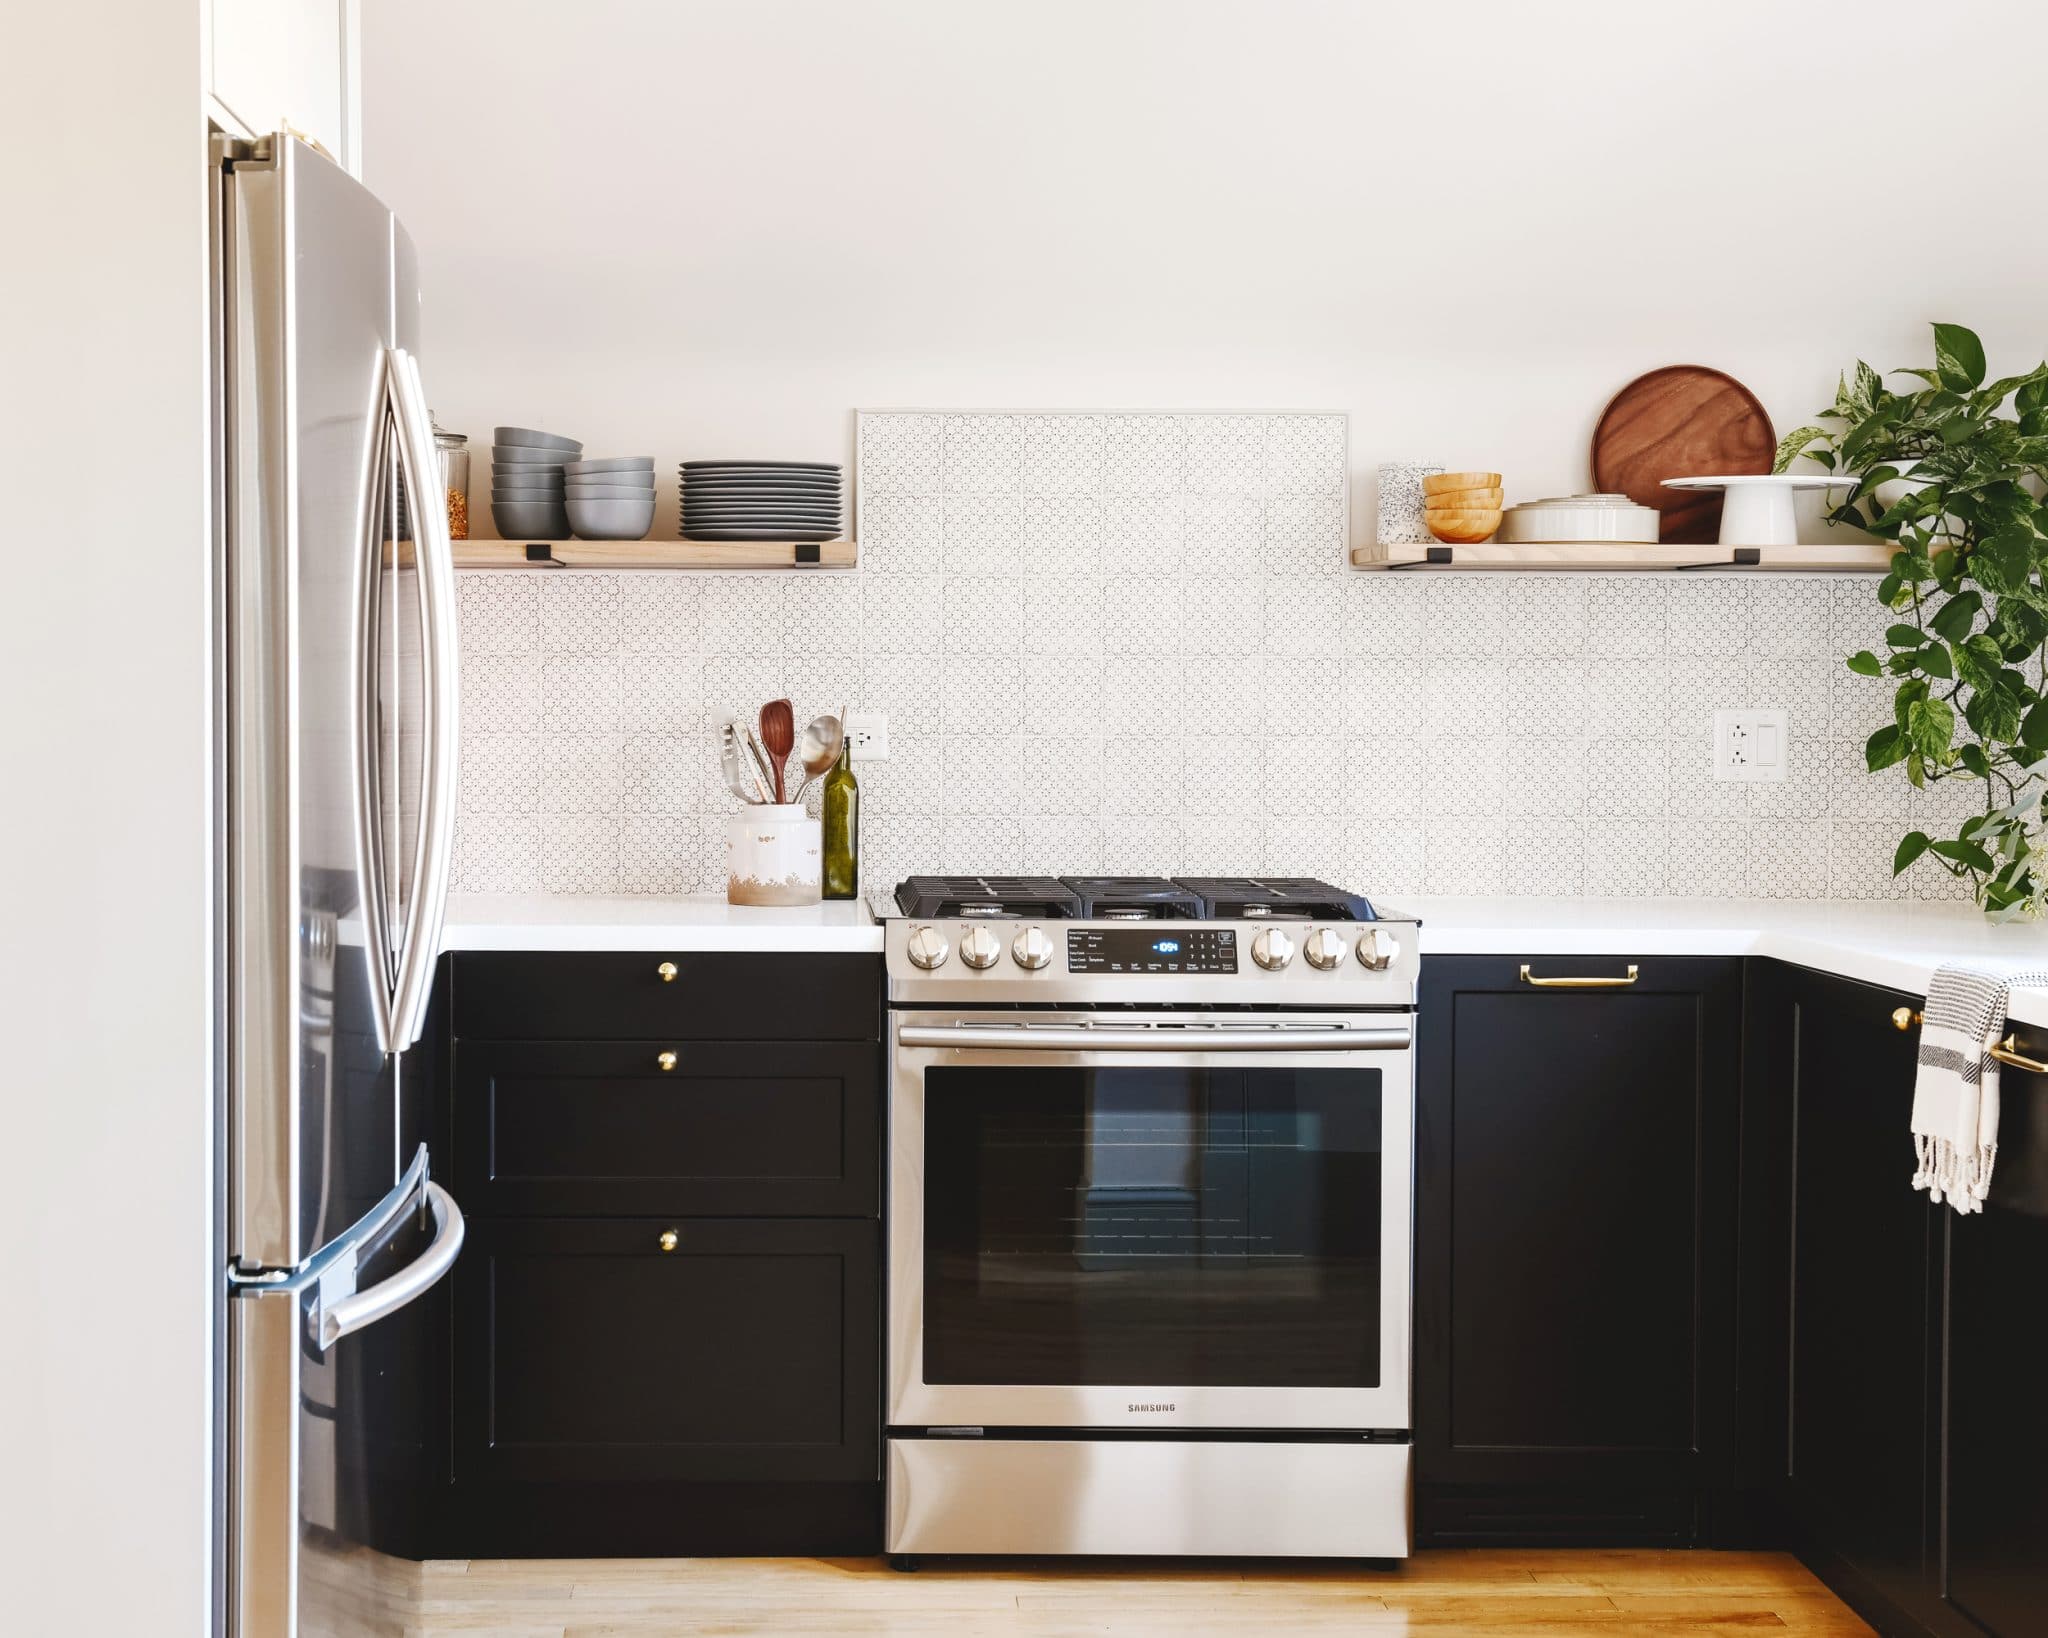 Black kitchen cabinets, white countertop and patterned tile backsplash | via Yellow Brick Home